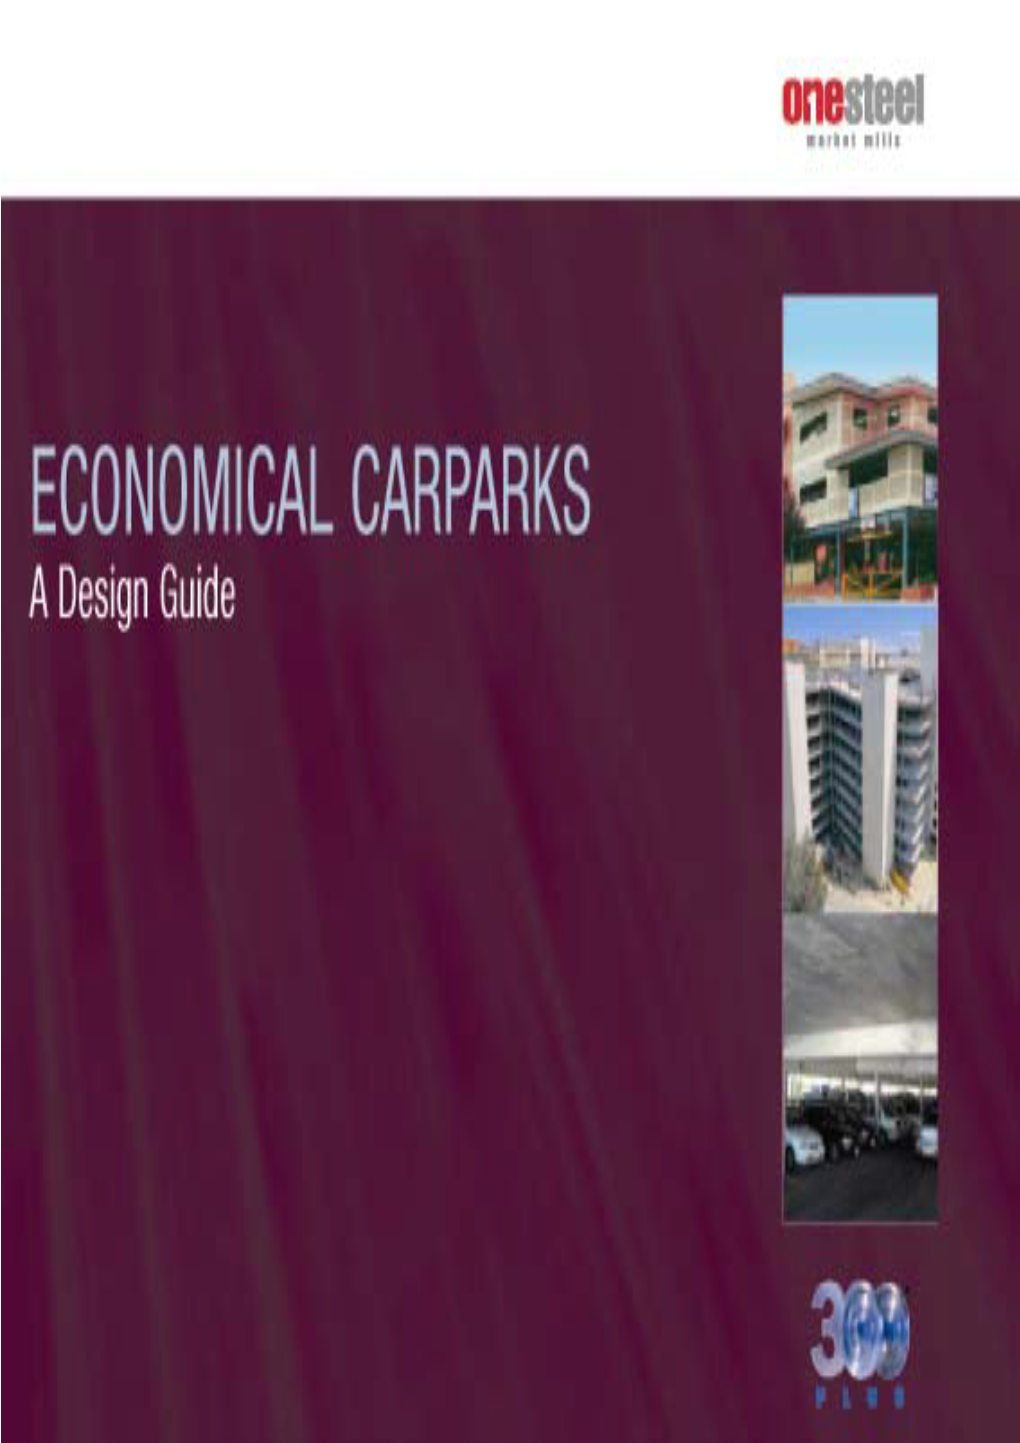 Design Guide: Economical Carparks.Pdf